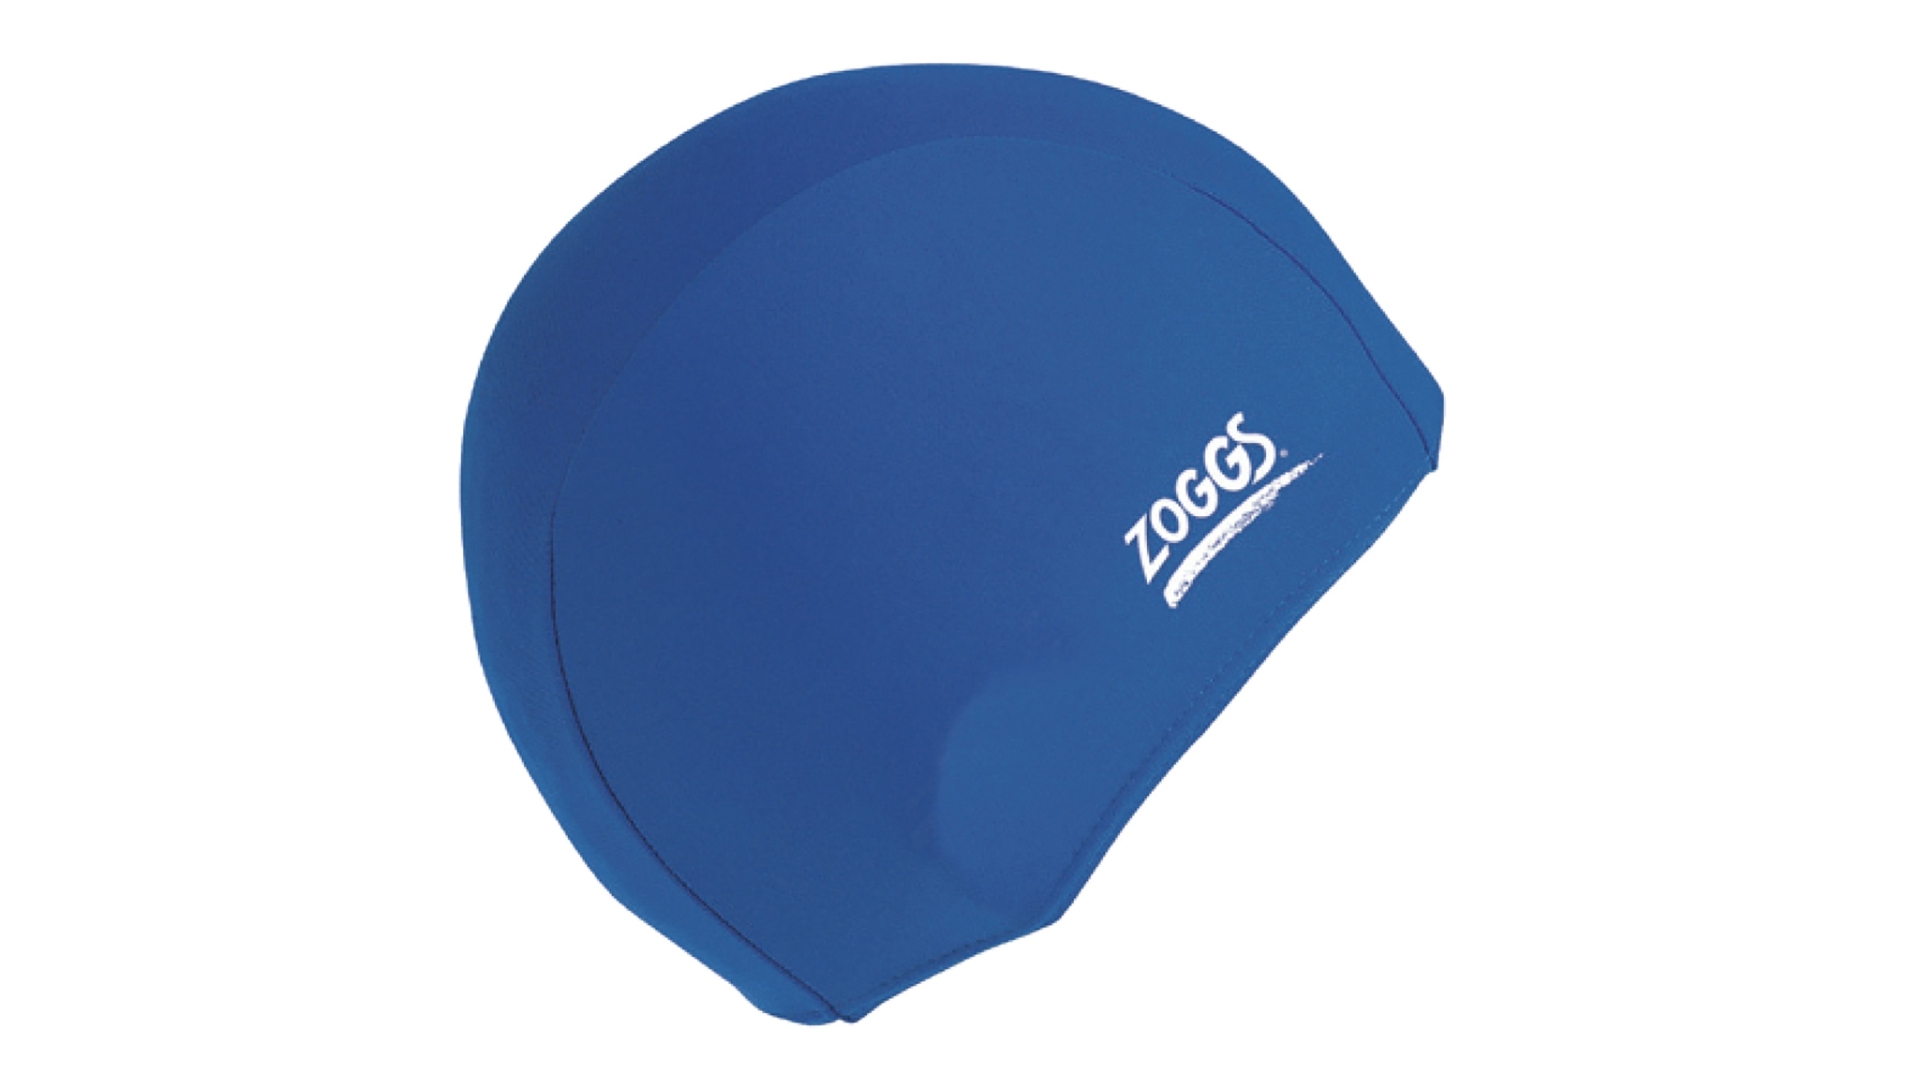 Zoggs Deluxe Stretch Swim Cap